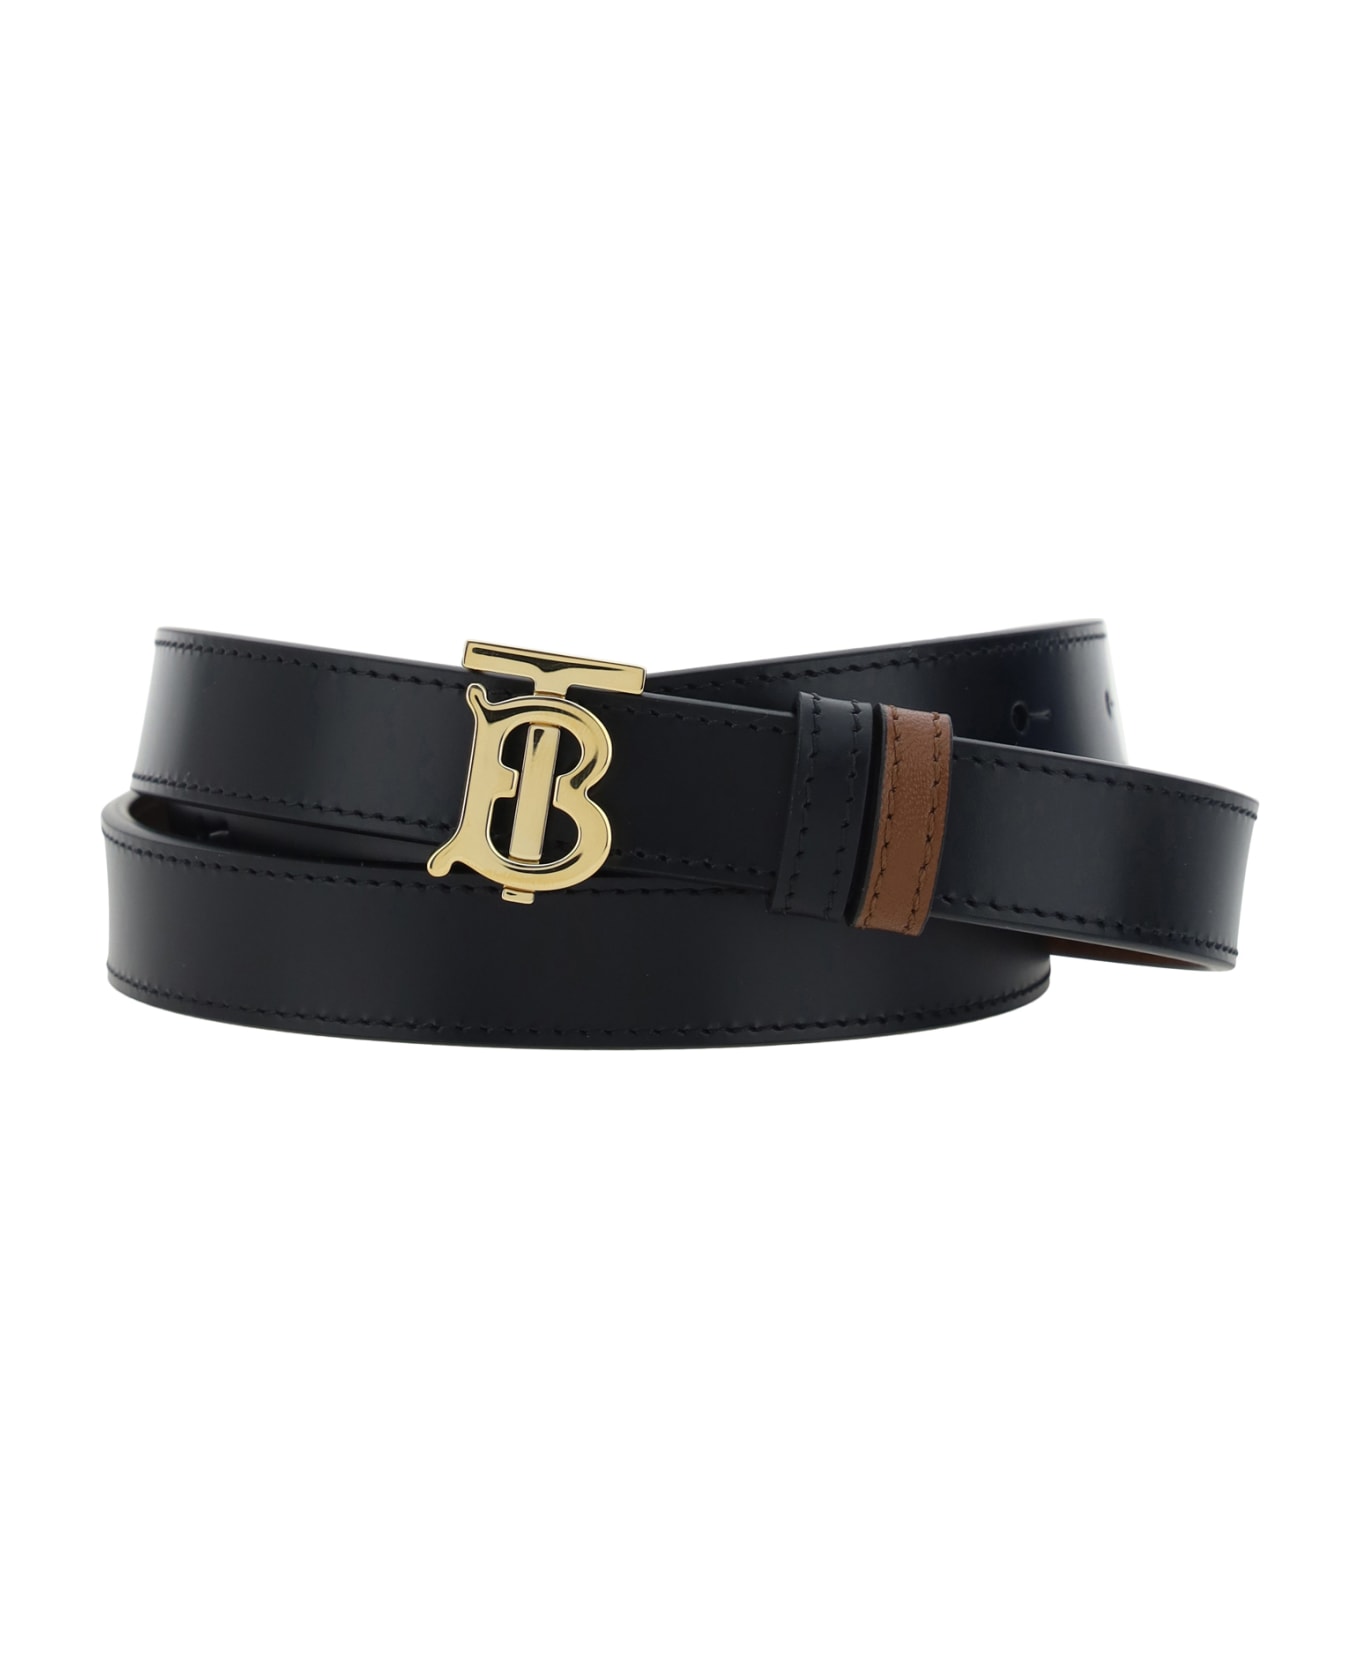 Burberry Belt - Black / Tan / Gold